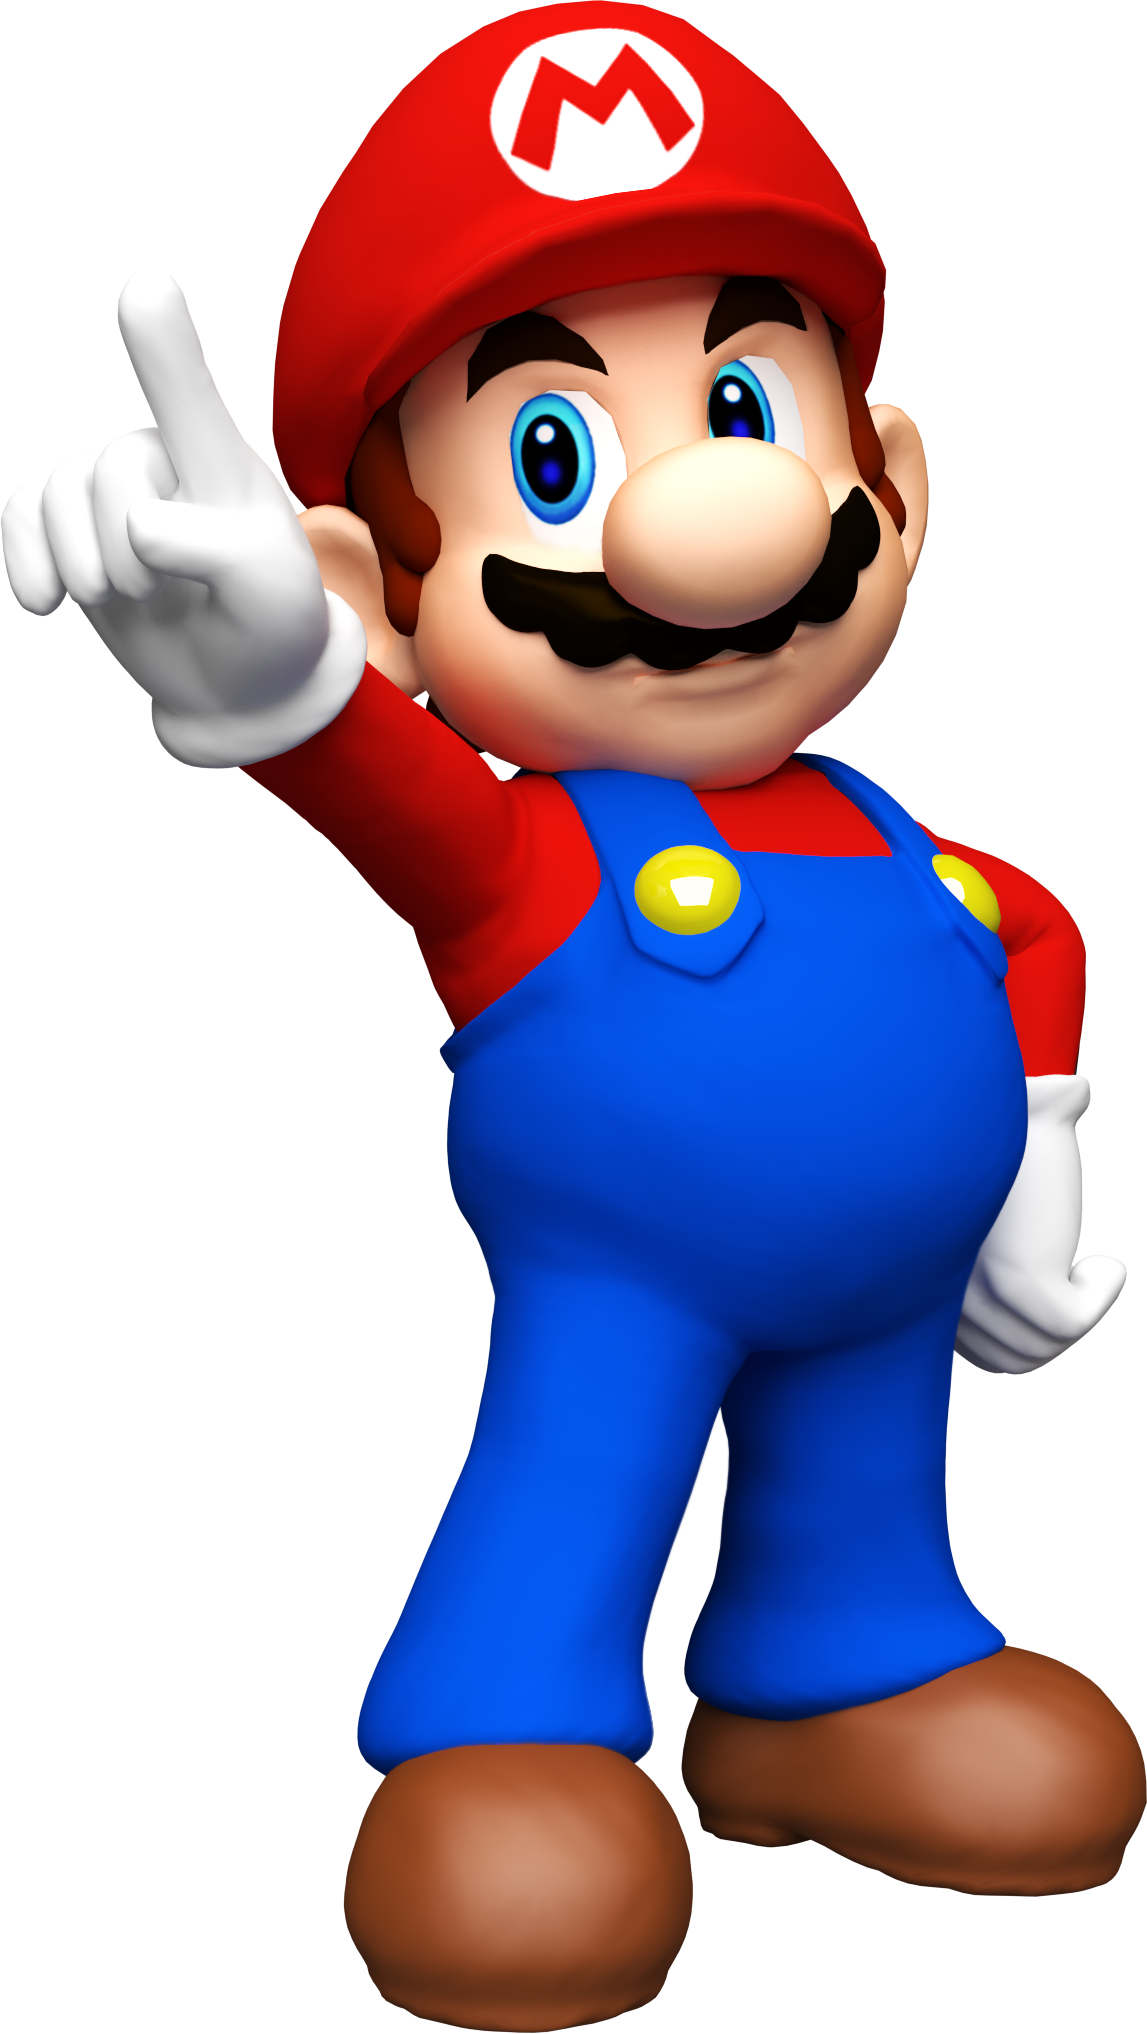 Марио из игры. Супер Марио. Марио супер Марио. Супер Марио супермарио. Герои супер Марио Нинтендо.